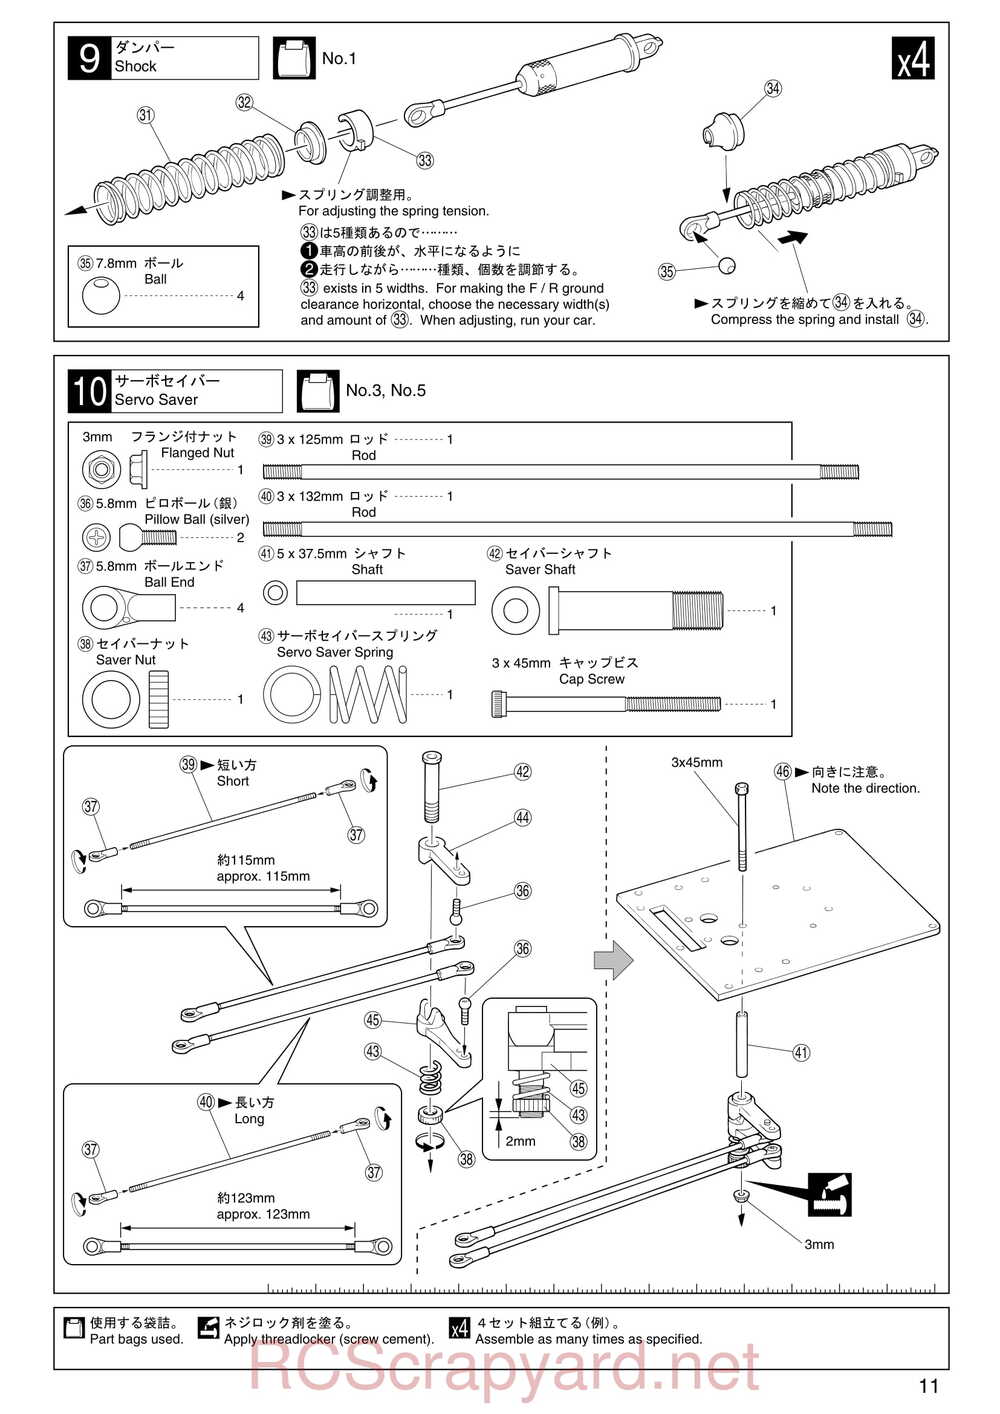 Kyosho - 30521b - Twin-Force - Manual - Page 11